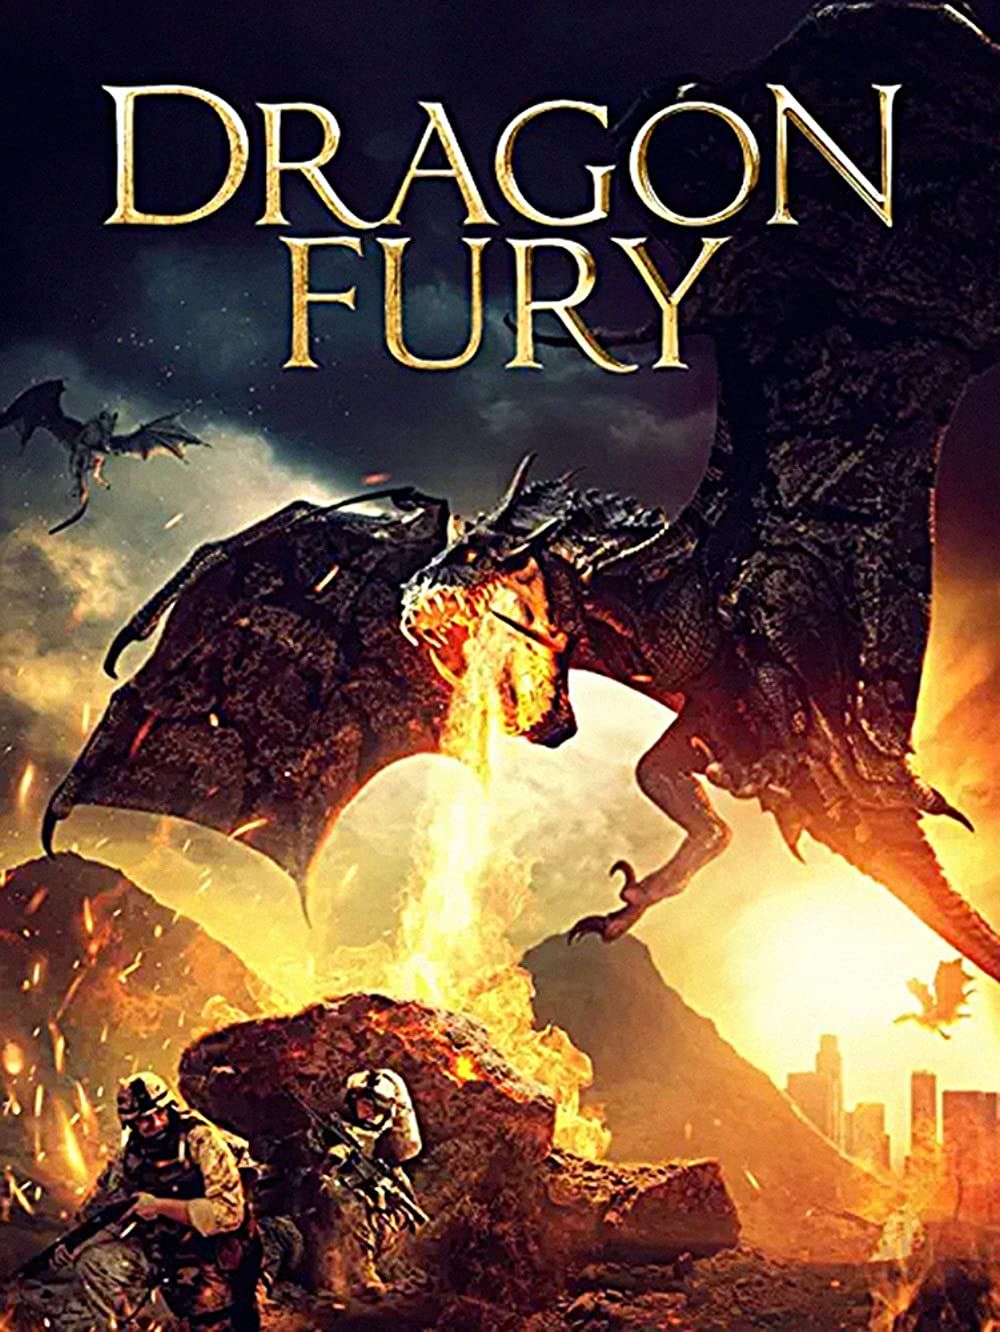 Dragon Fury (2021) Hindi Dubbed HDRip download full movie